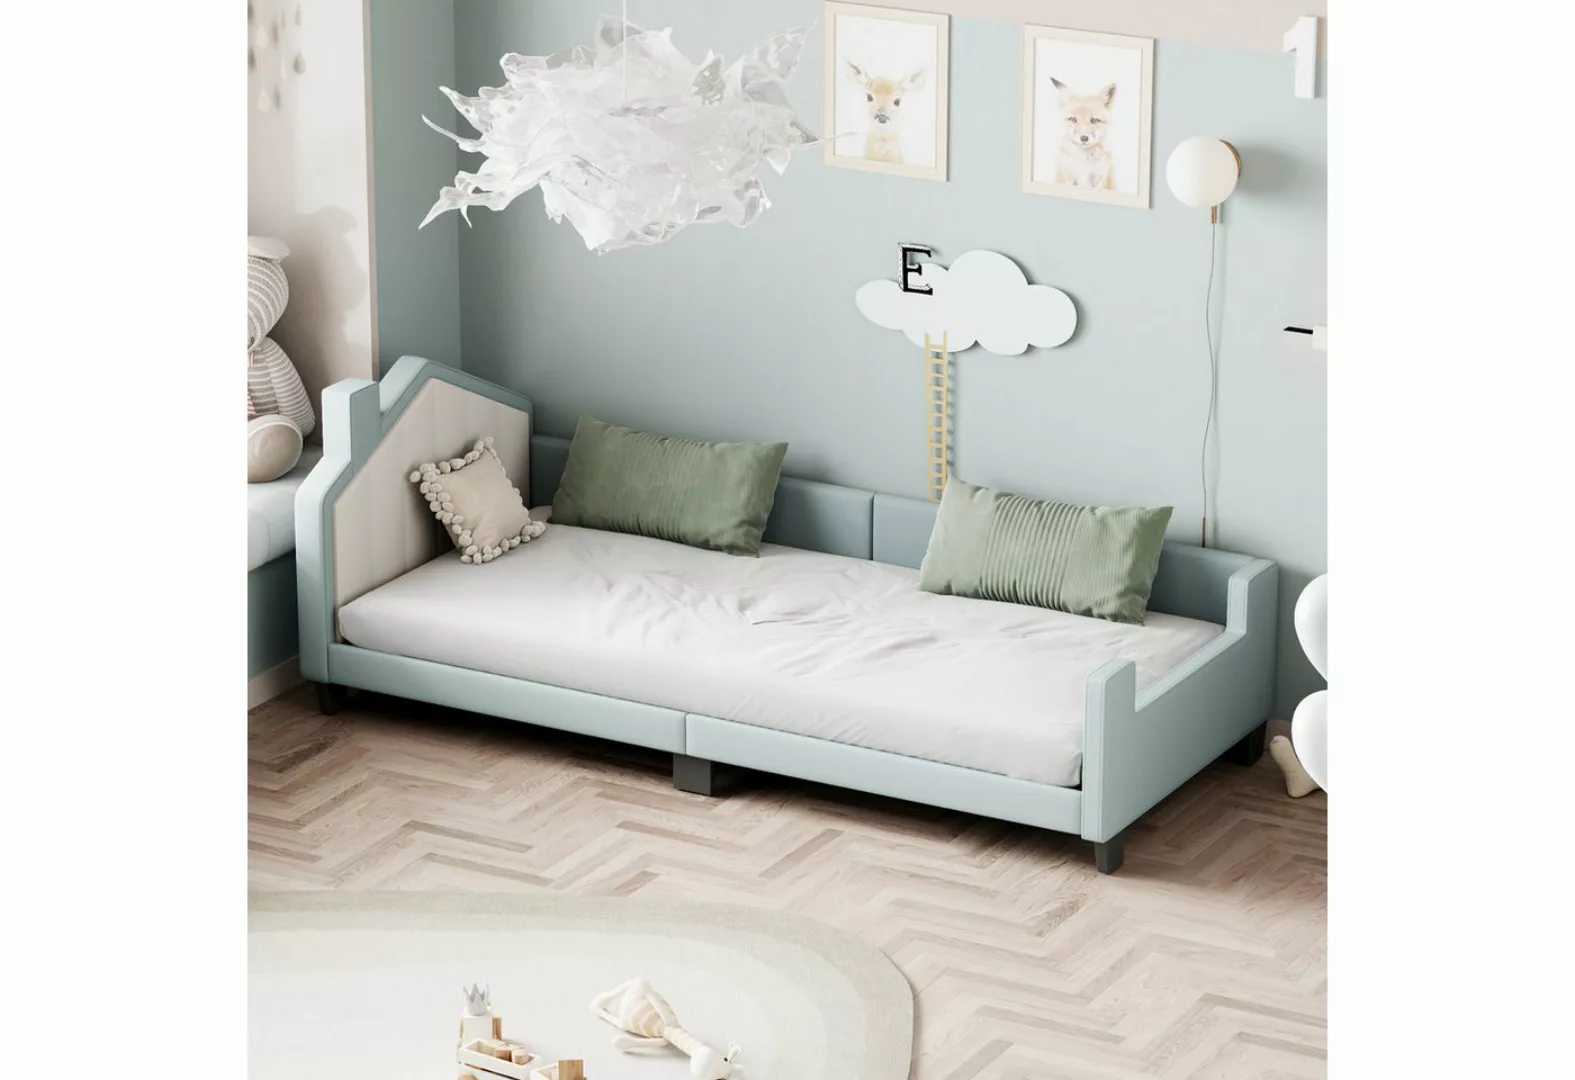 Blusmart Kinderbett Polsterbett 90*200 (Kinderschlafsofa, 1-tlg., mit Kopf- günstig online kaufen